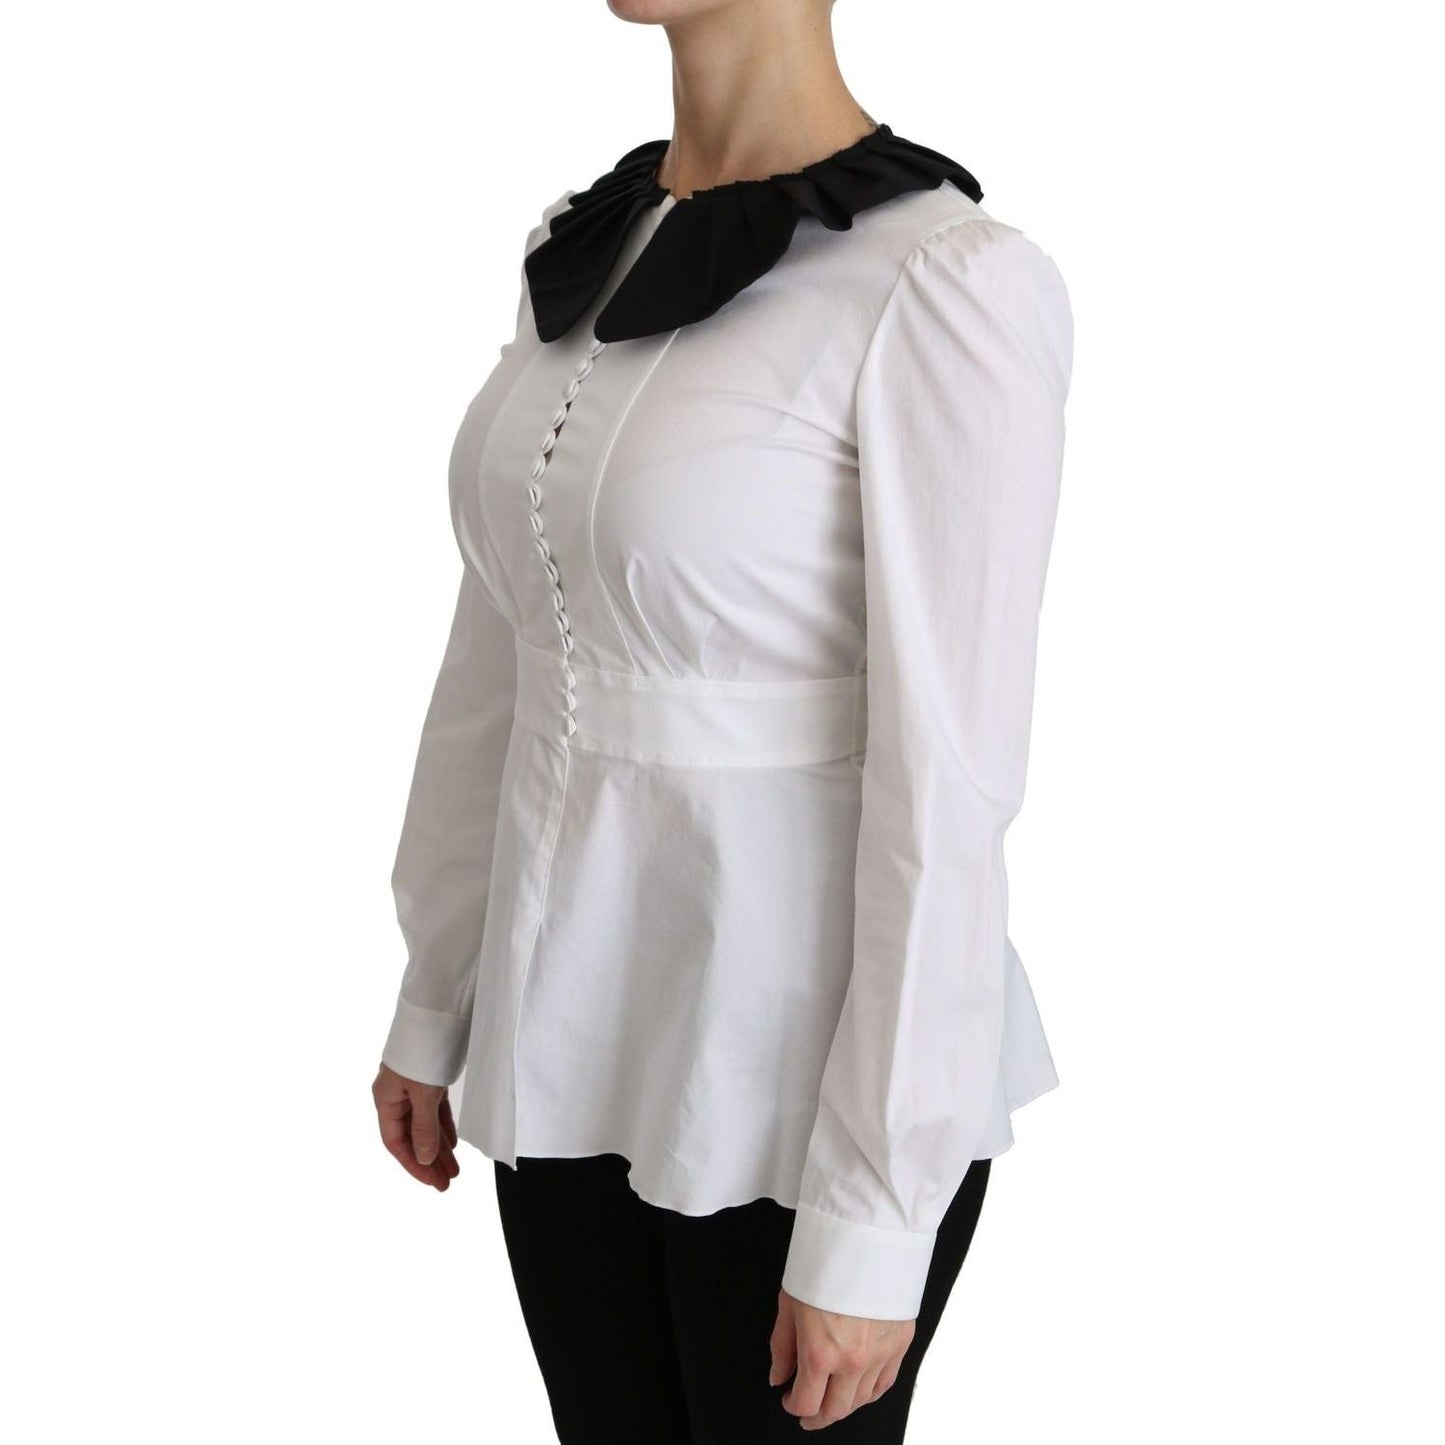 Dolce & Gabbana Elegant White Collared Cotton Top white-collared-long-sleeve-blouse-cotton-top